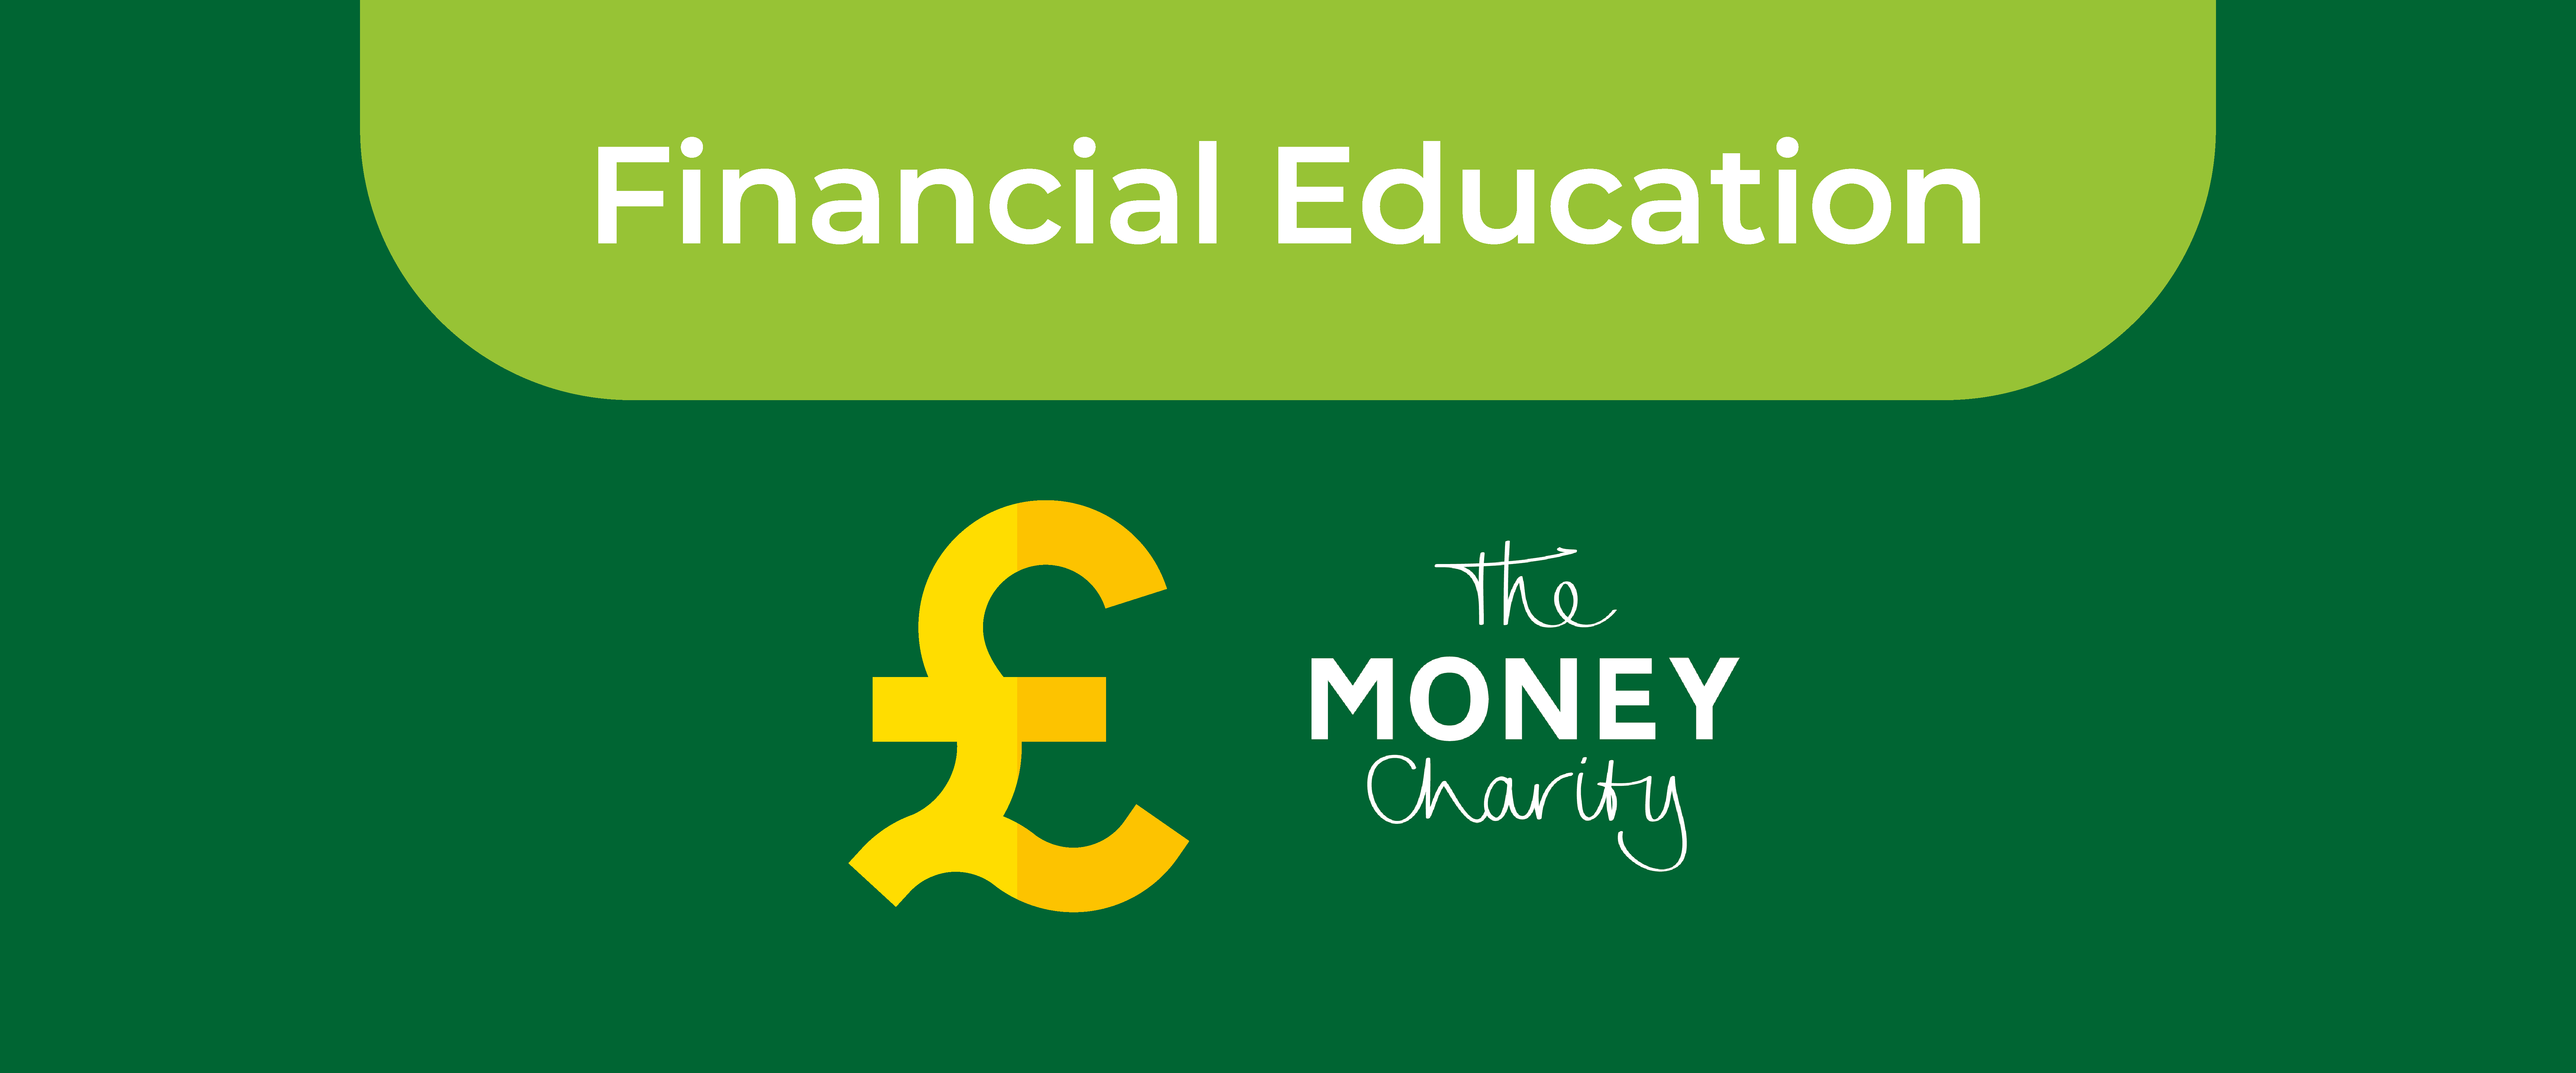 Project Longhurst - Financial education